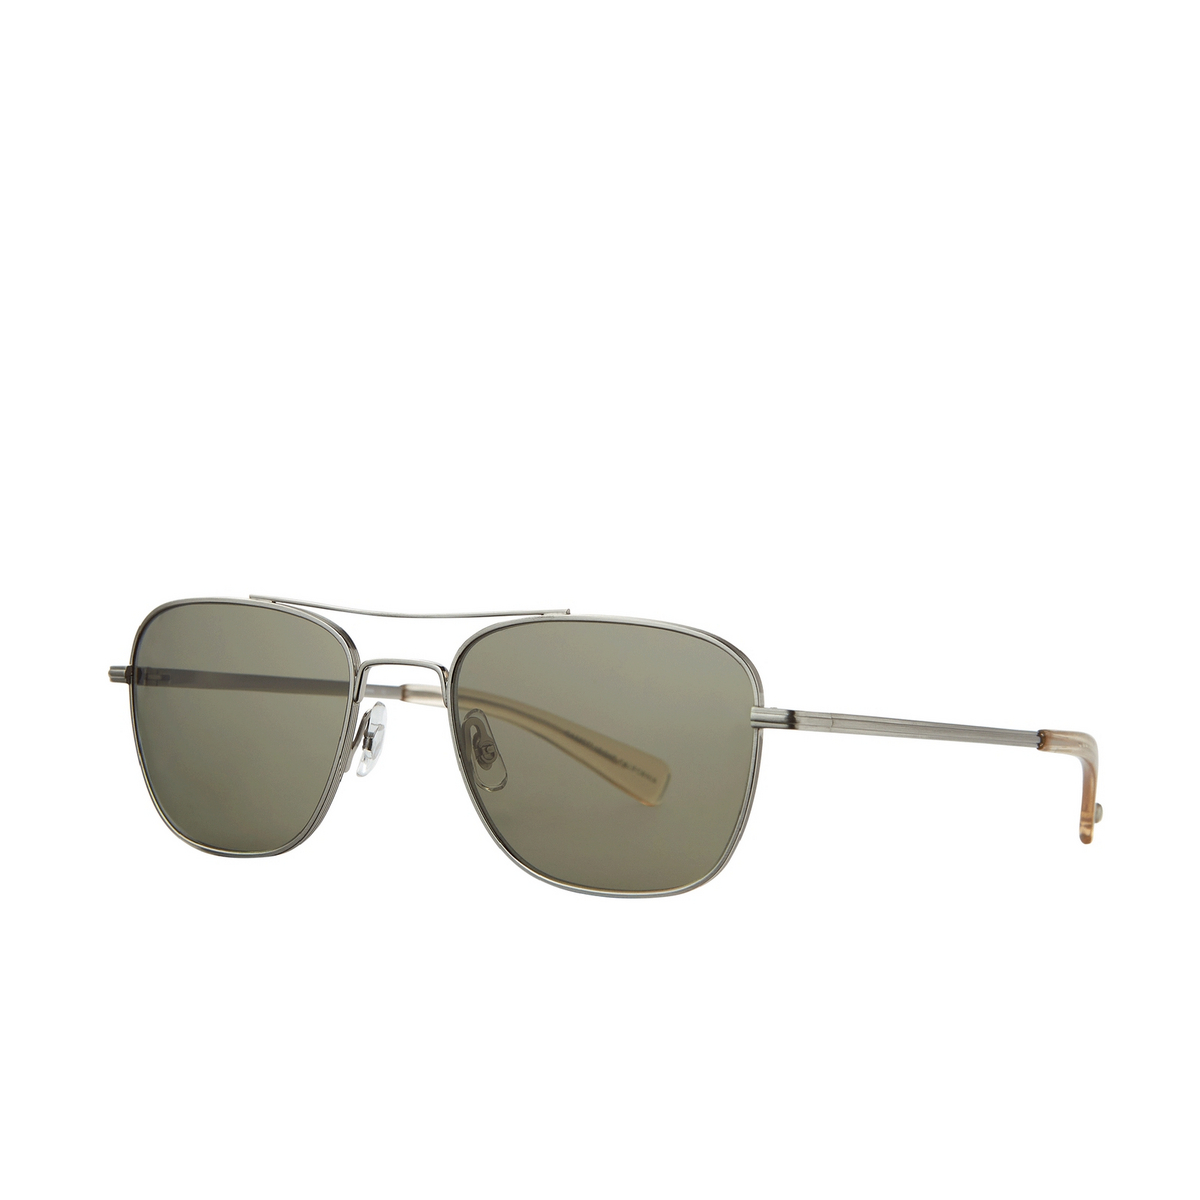 Garrett Leight® Aviator Sunglasses: Harbor Sun color BS-CH/G15SUV Brushed Silver-champagne/g15 Suv - 2/2